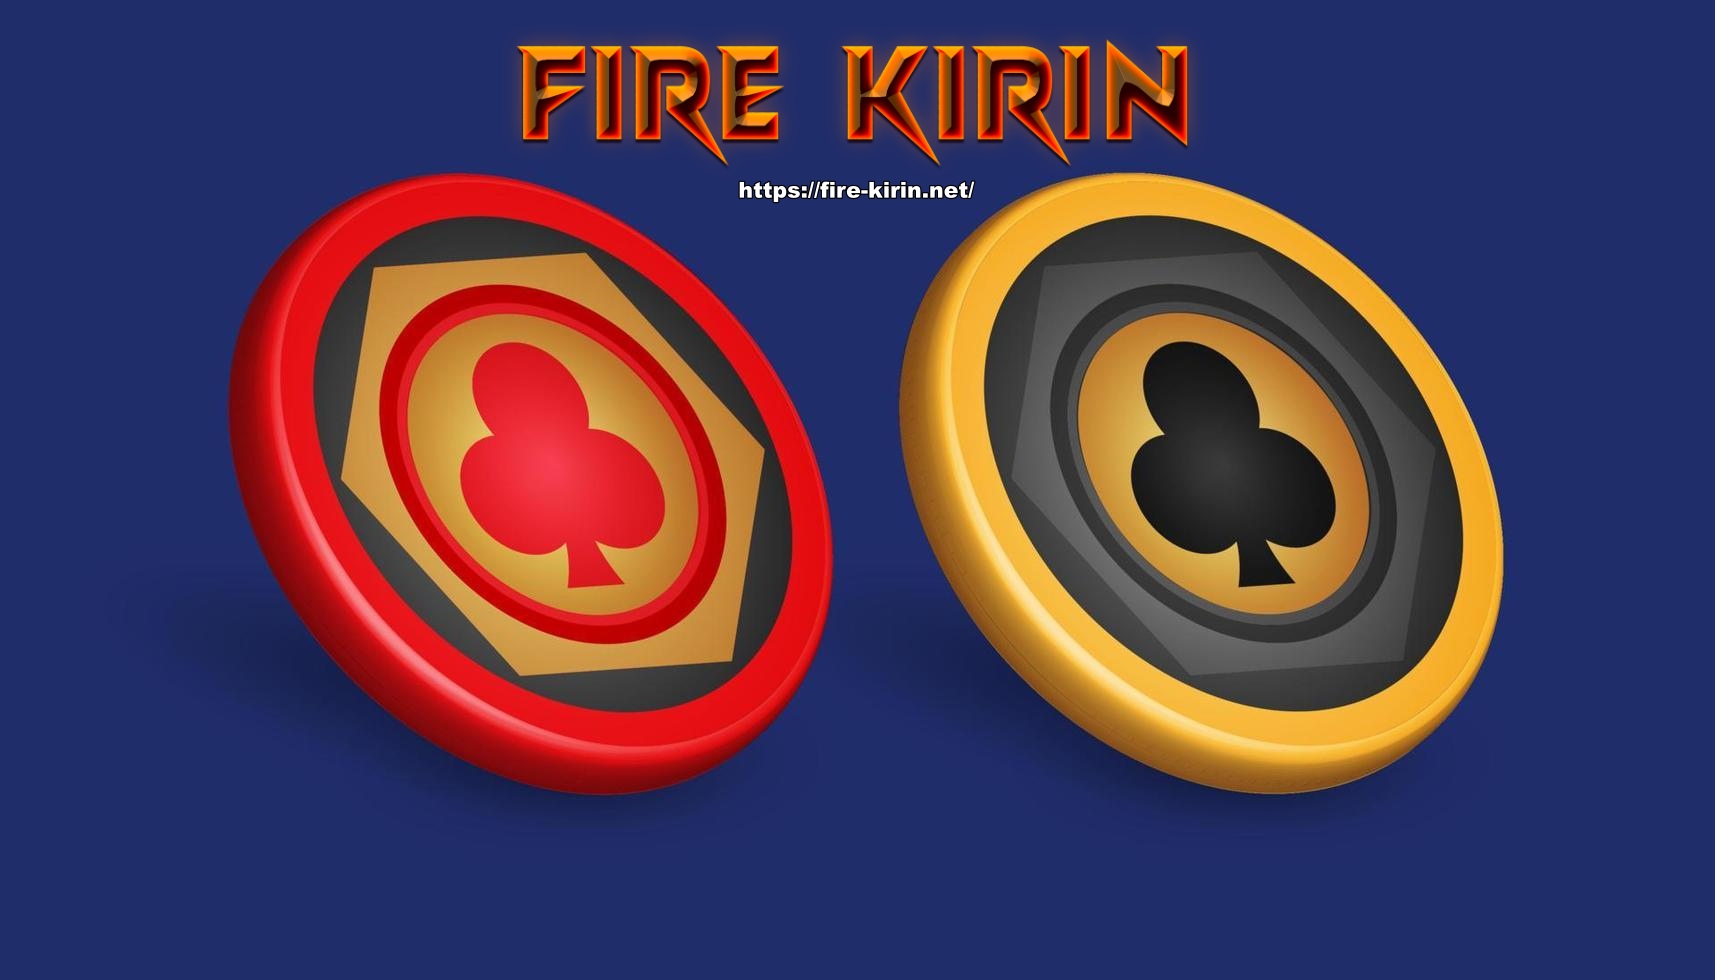 Fire Kirin Casino: Roar of Wealth and Fortune Awaits